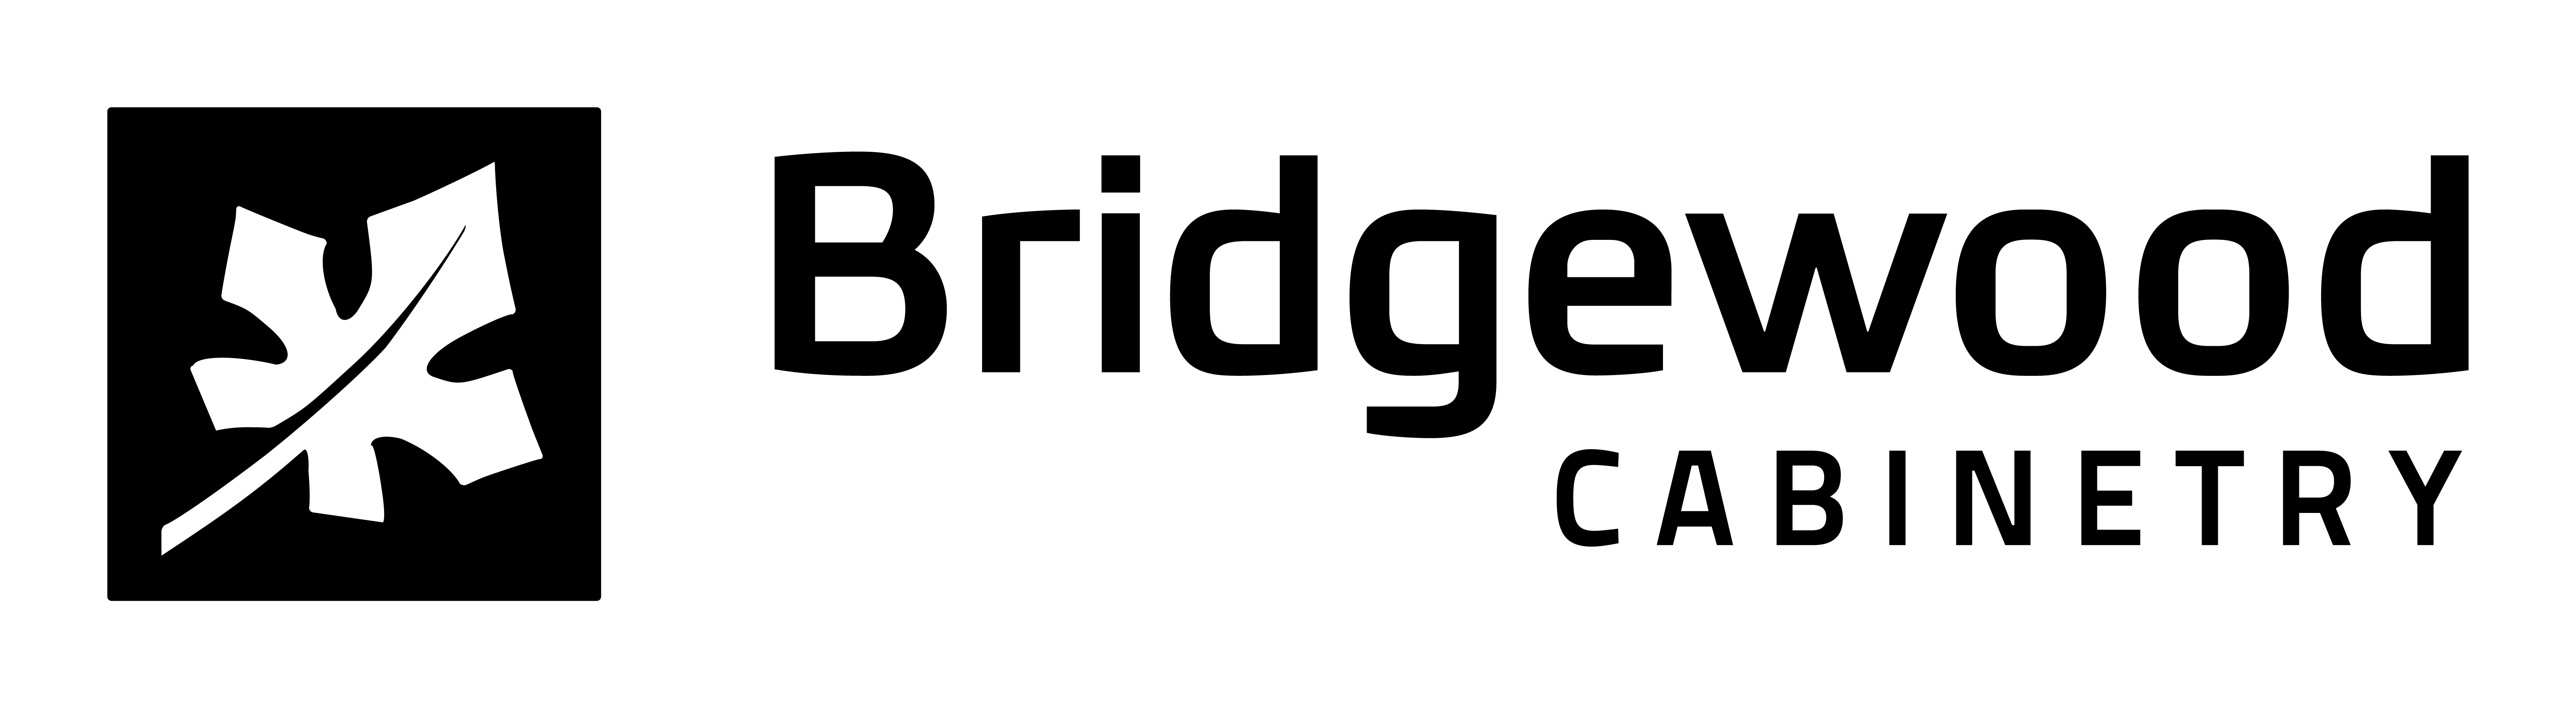 bridgewood logo